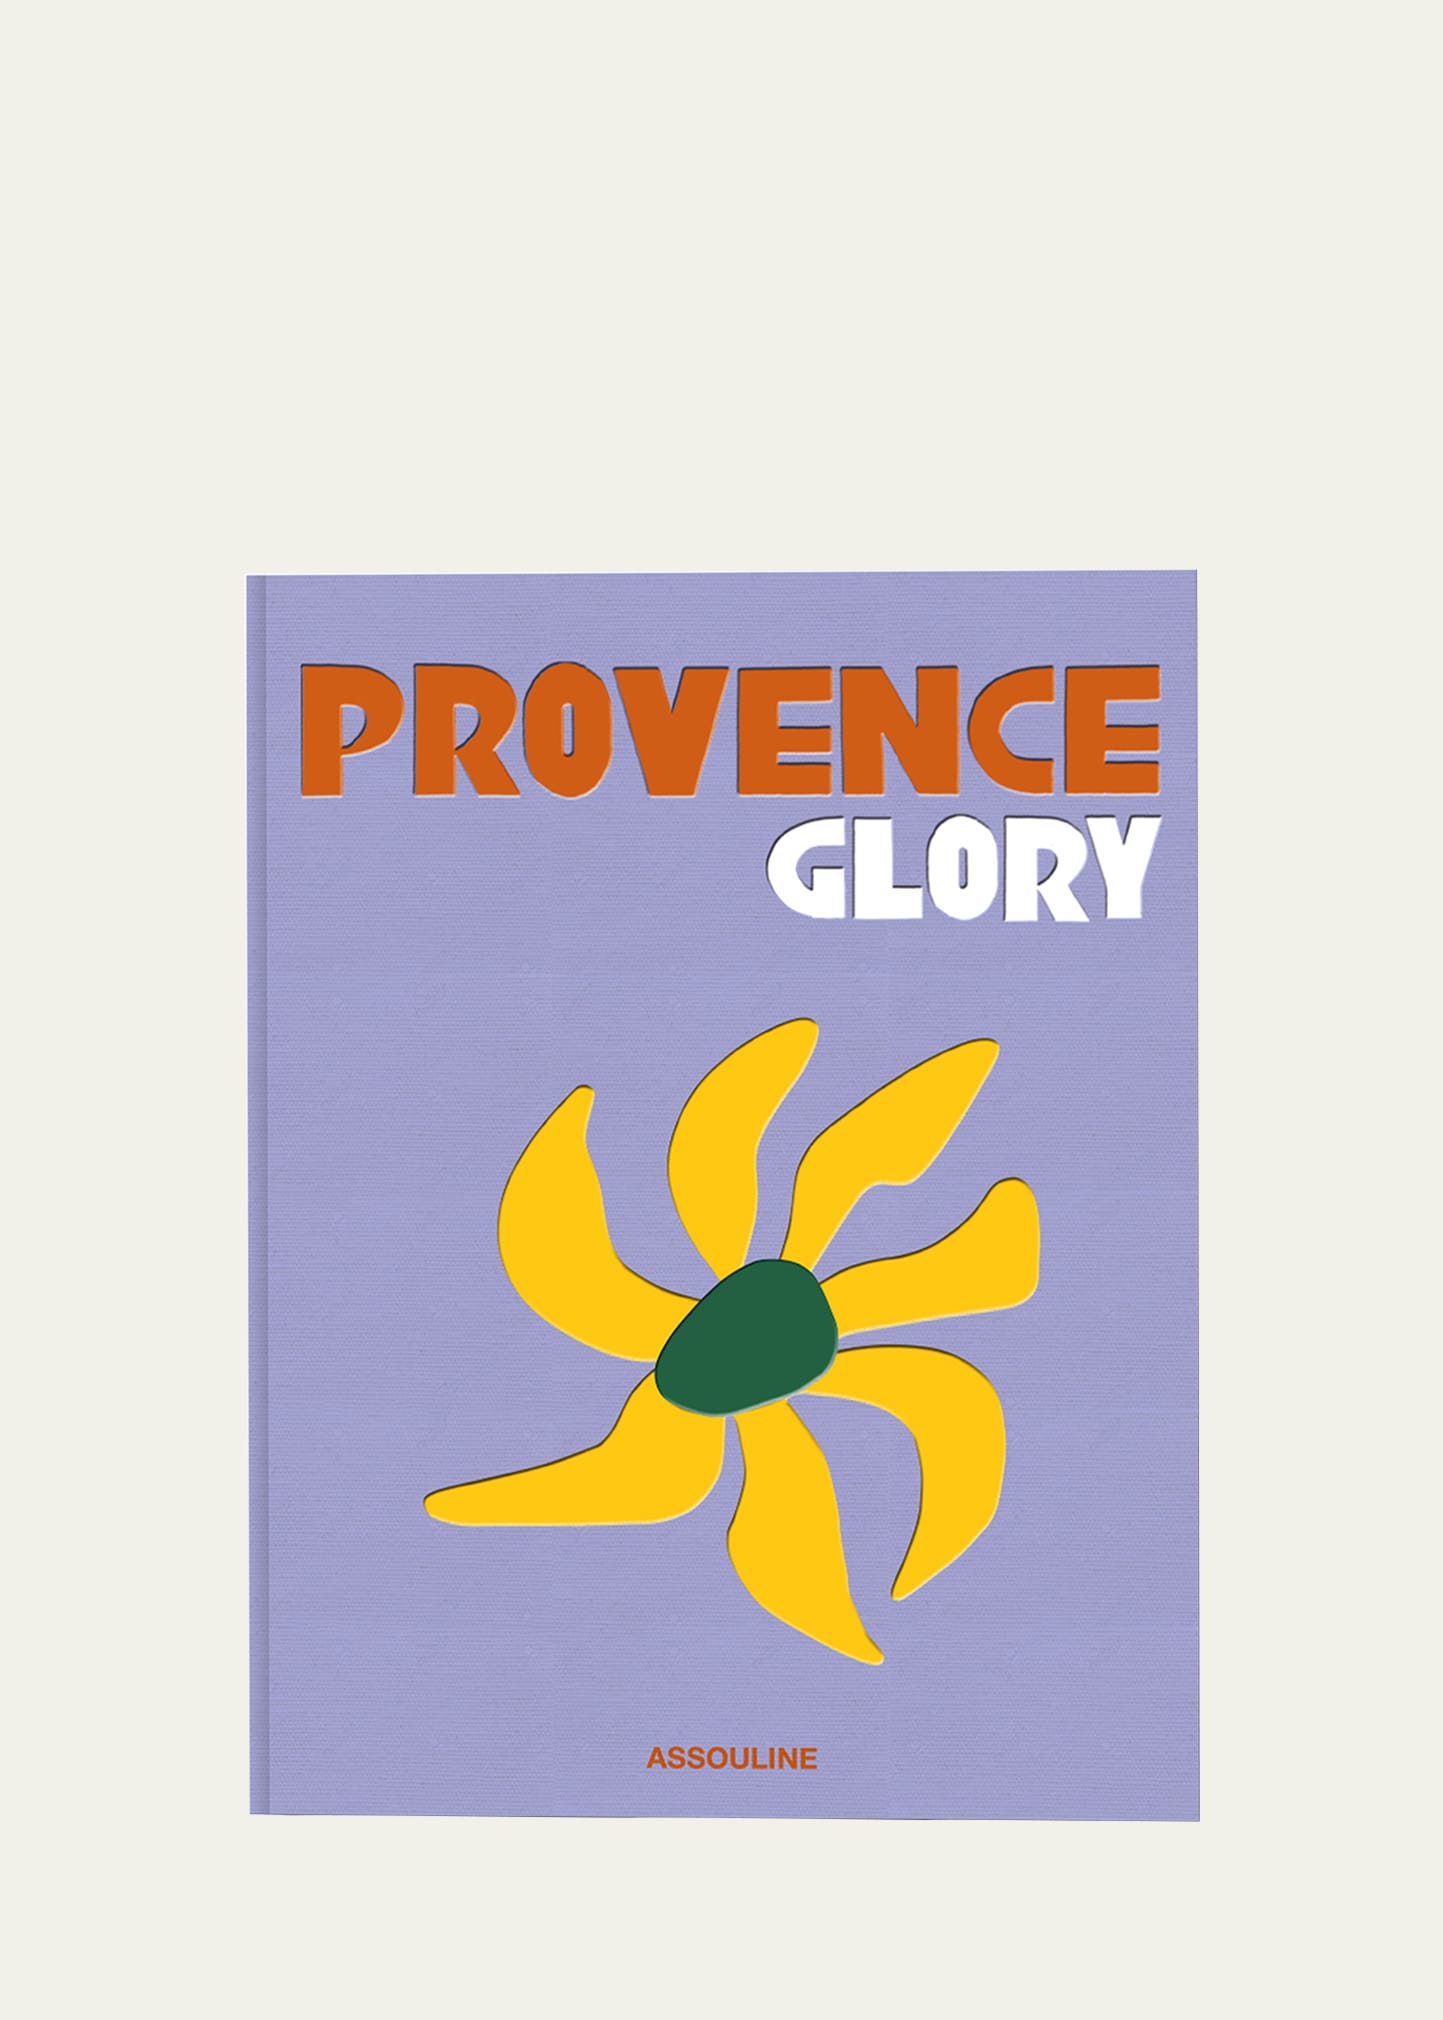 "Provence Glory" Book by Francois Simon